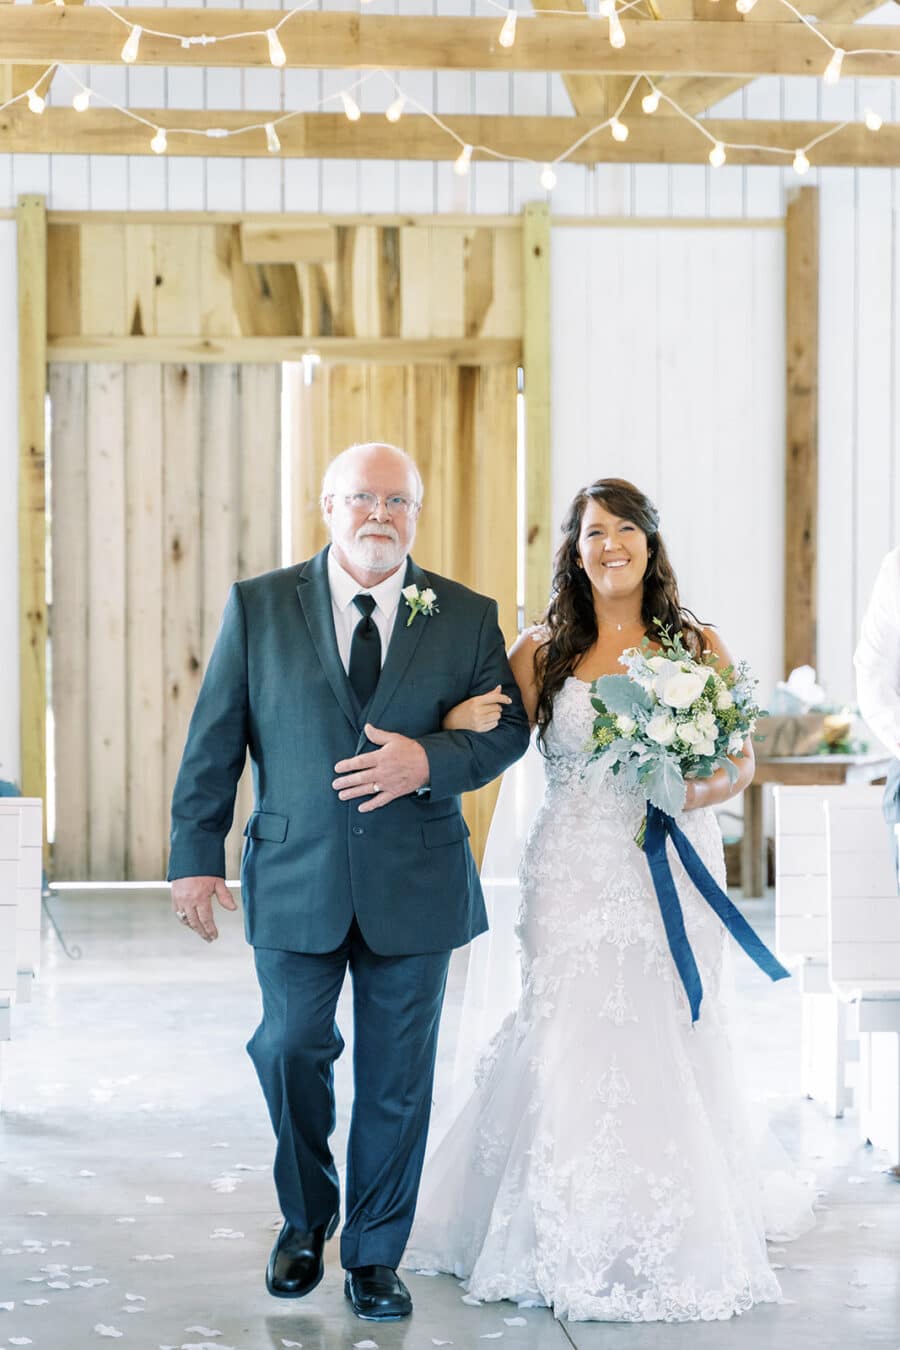 Father escorting bride down the aisle at Grace Valley Farm | Nashville Bride Guide